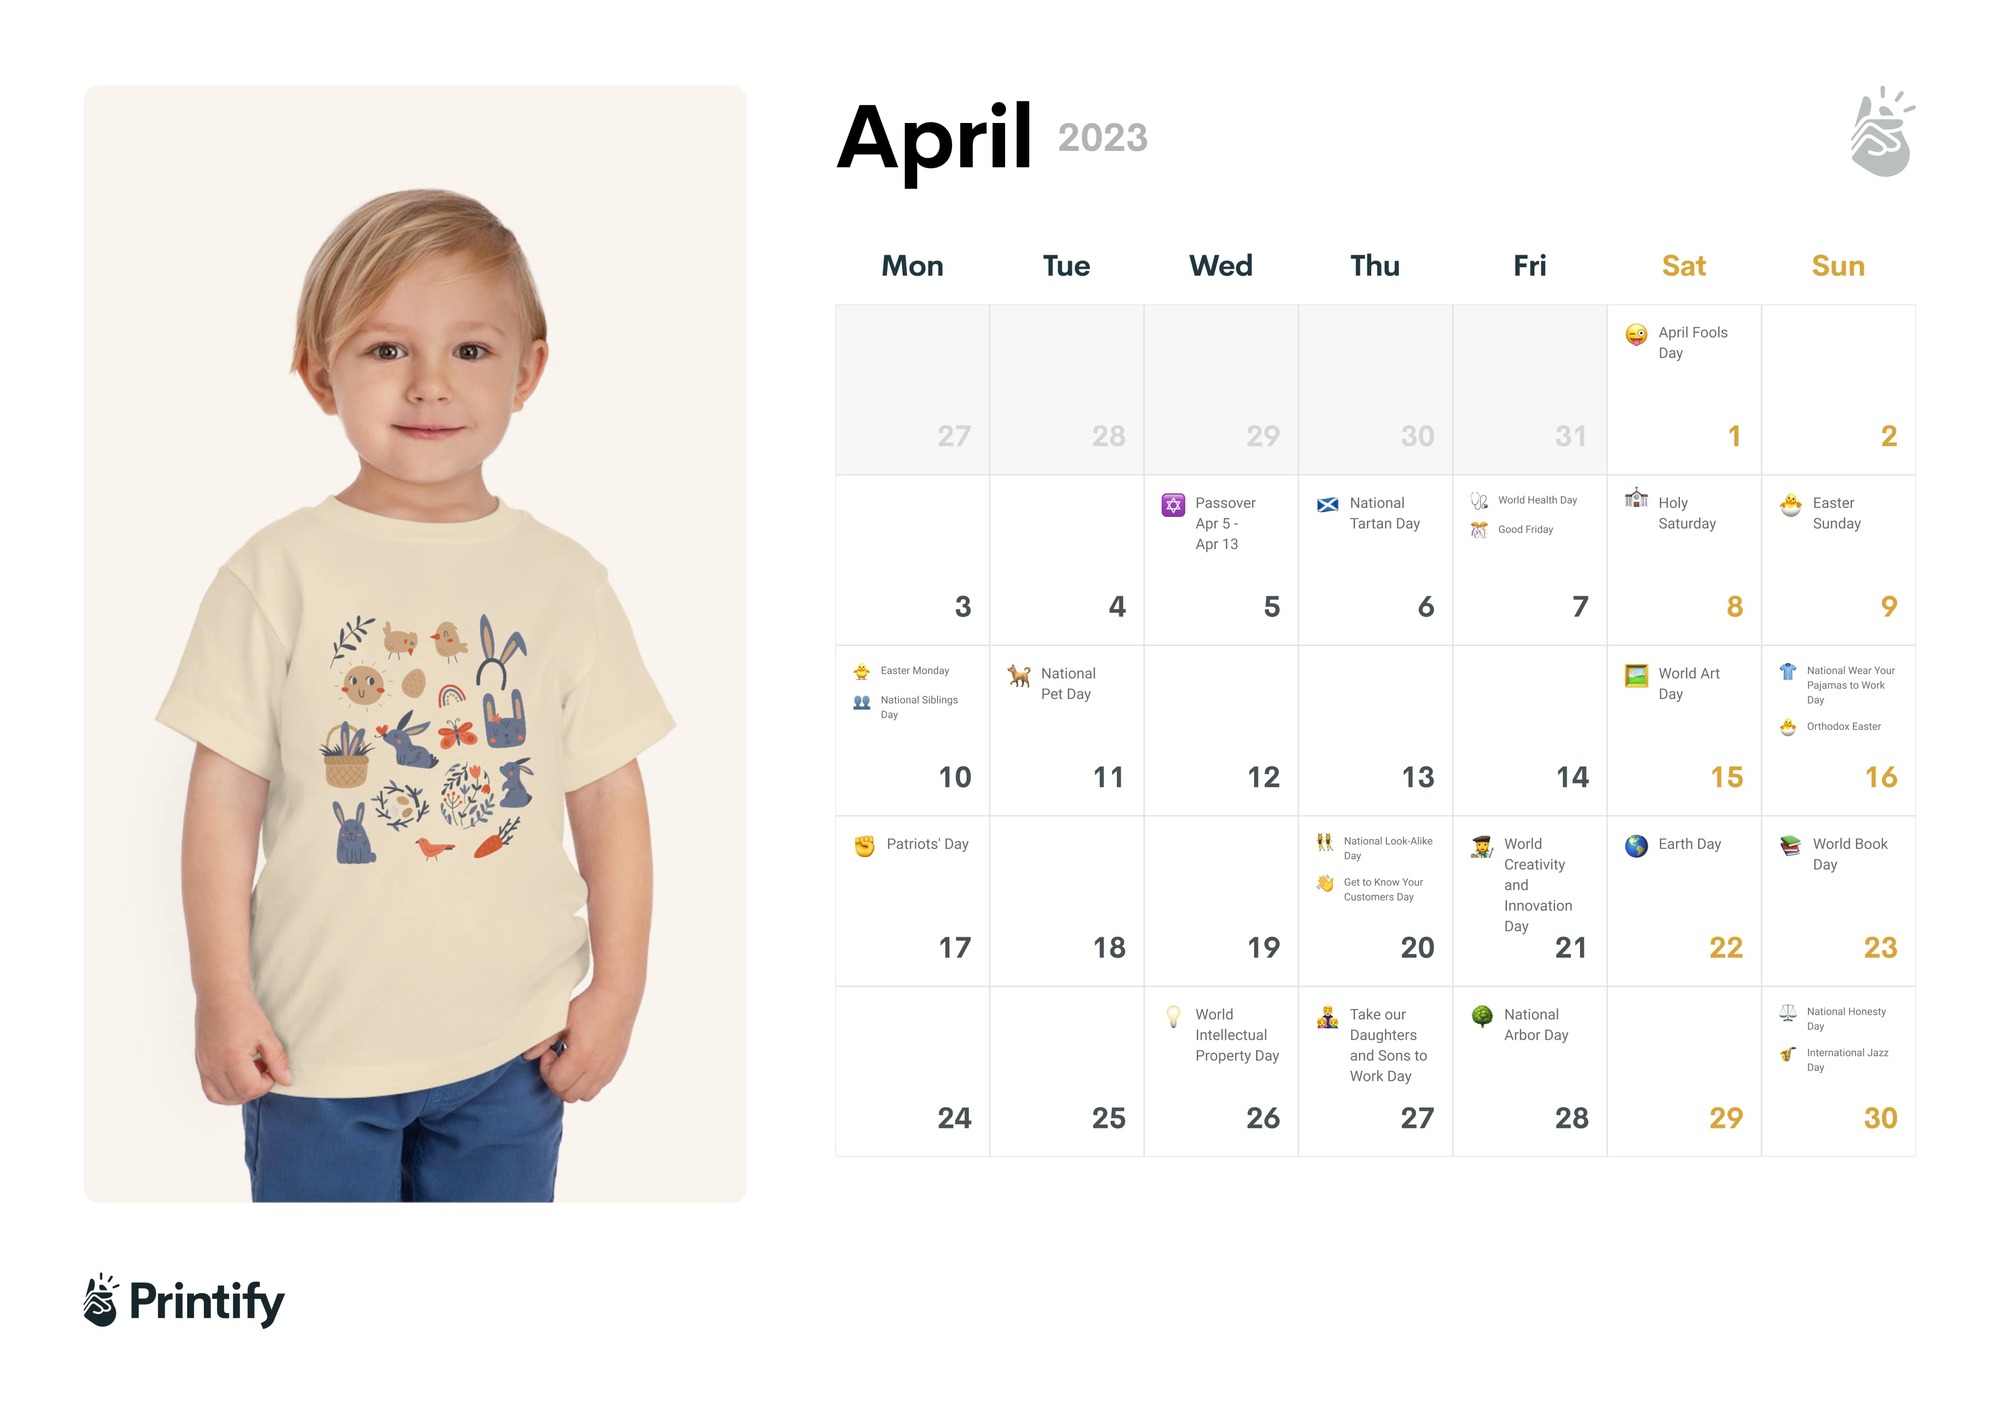 Marketing Calendar 2022 - April